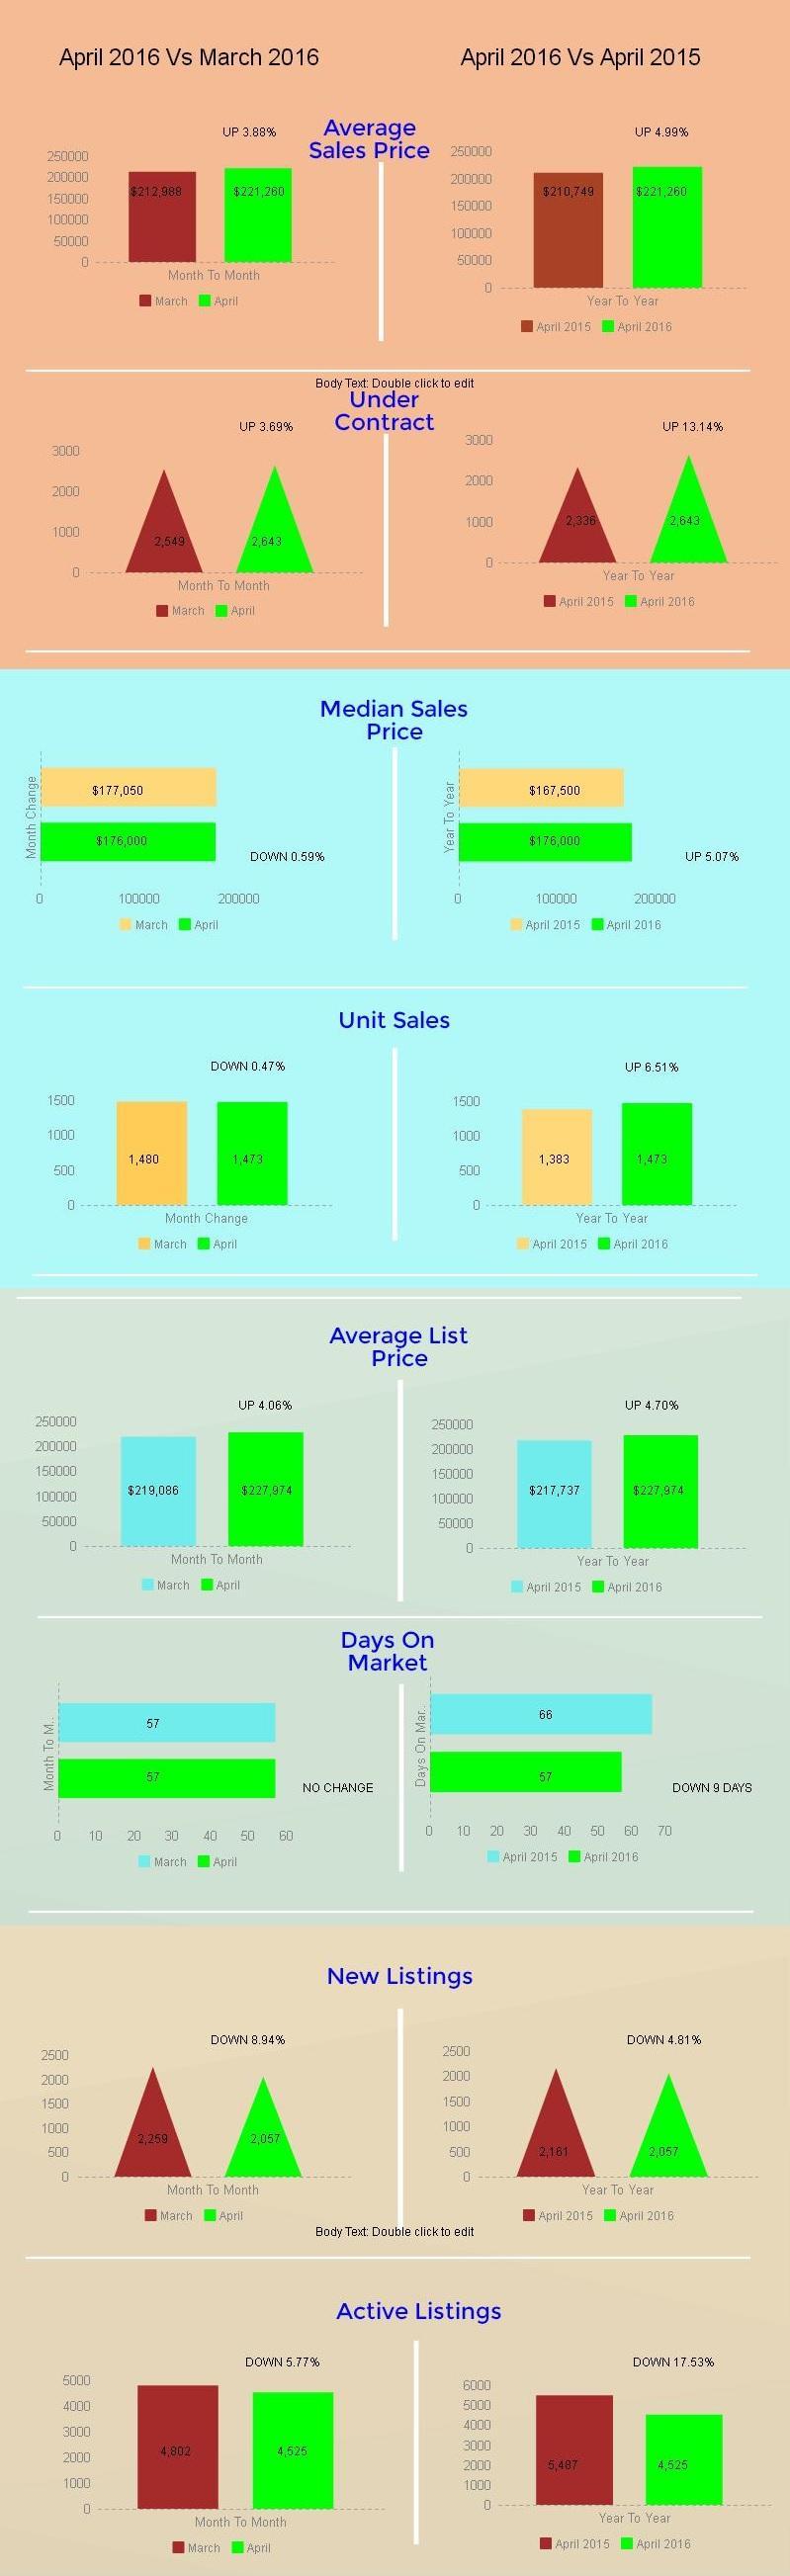 tucson housing market April 2016